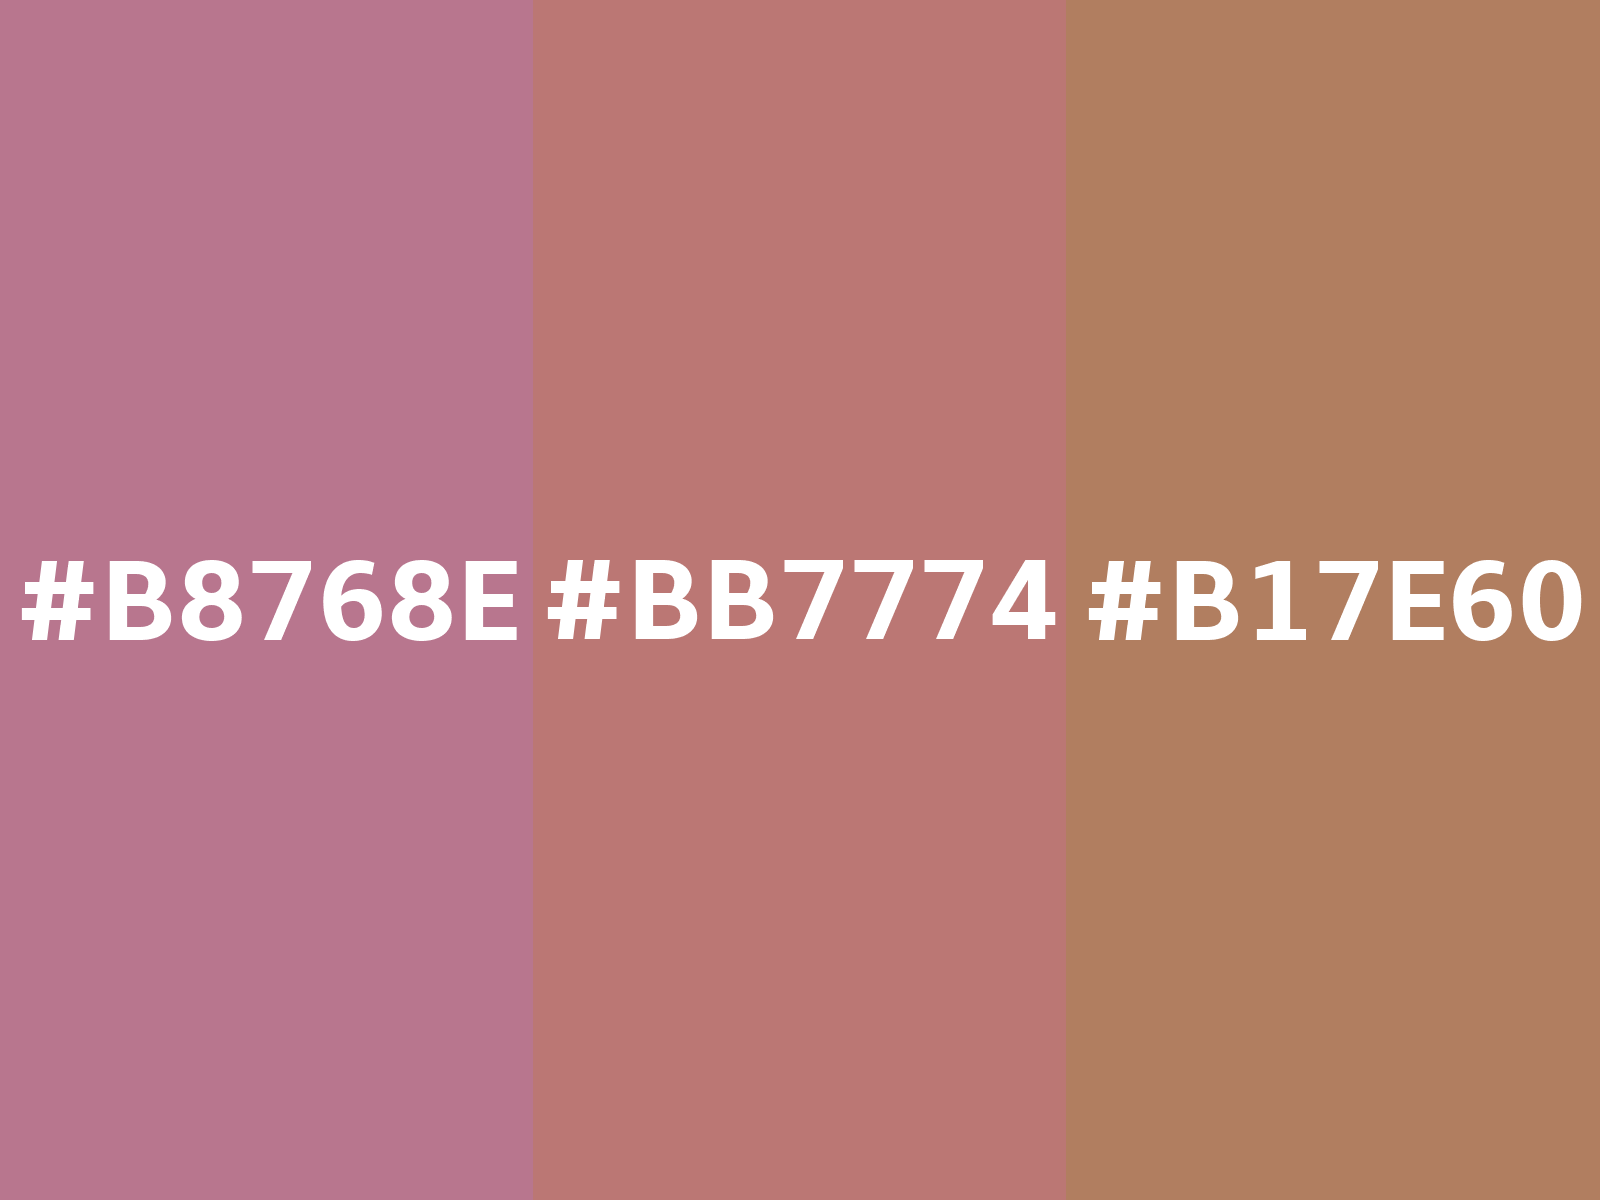 bb7774